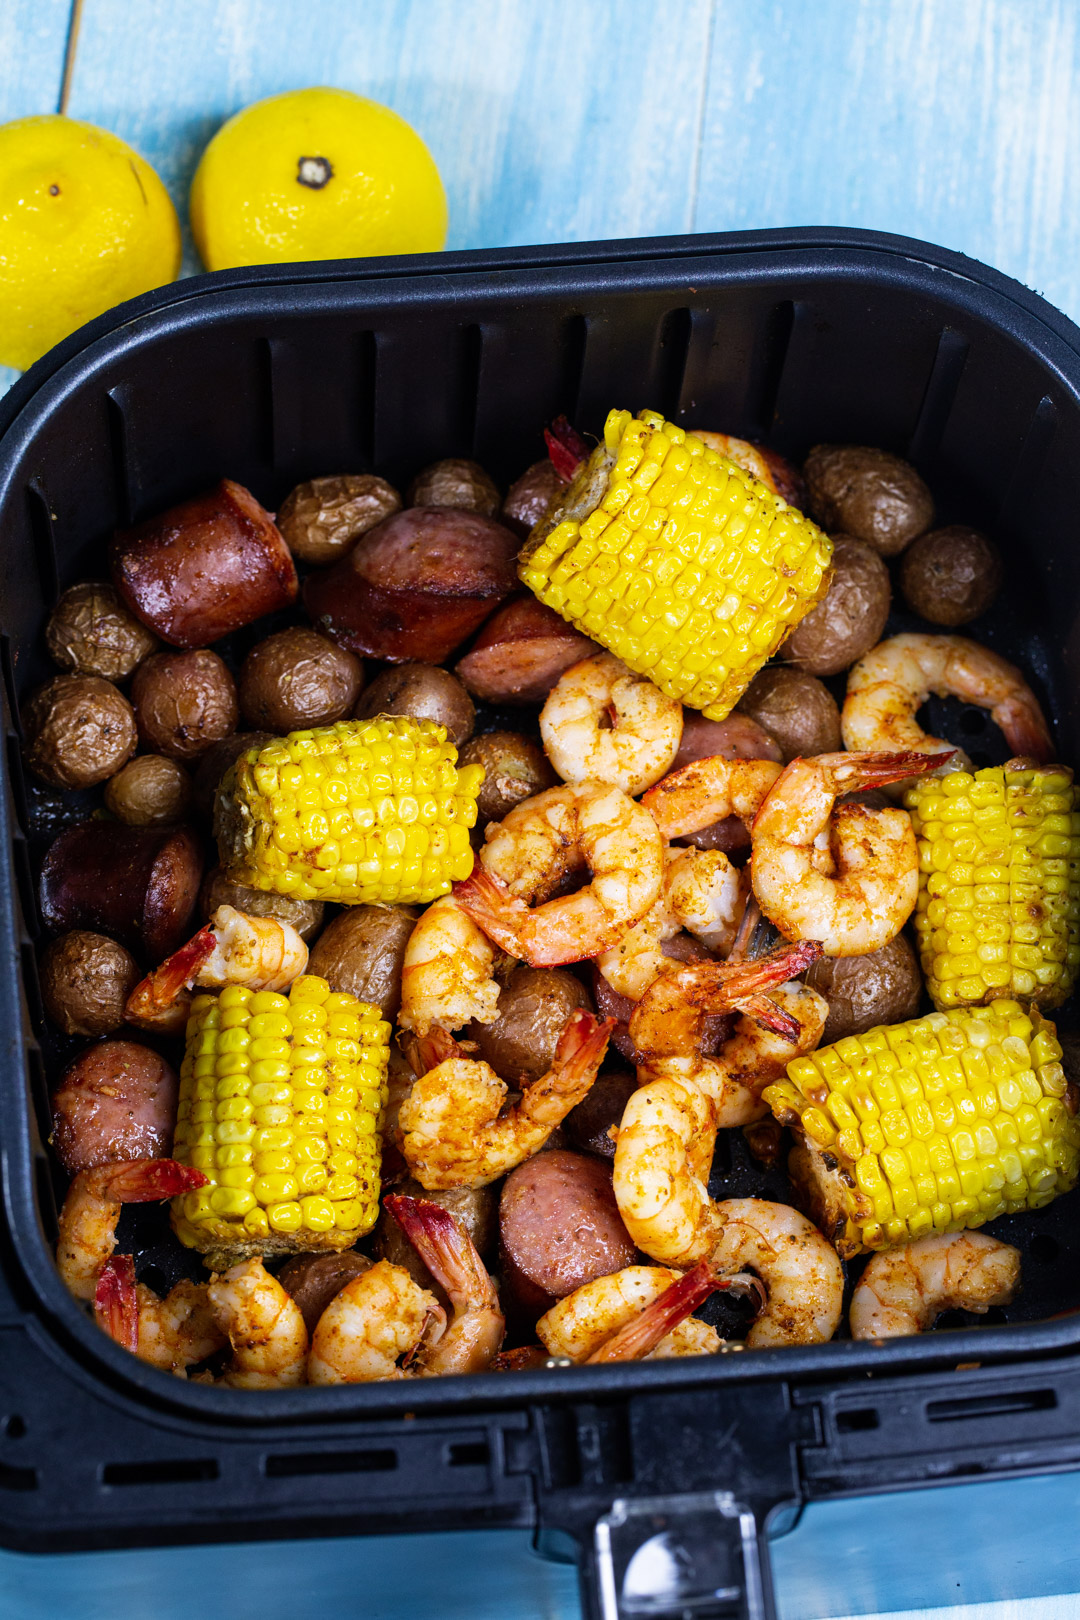 Shrimp, corn sausage and potatoes in air fryer basket.